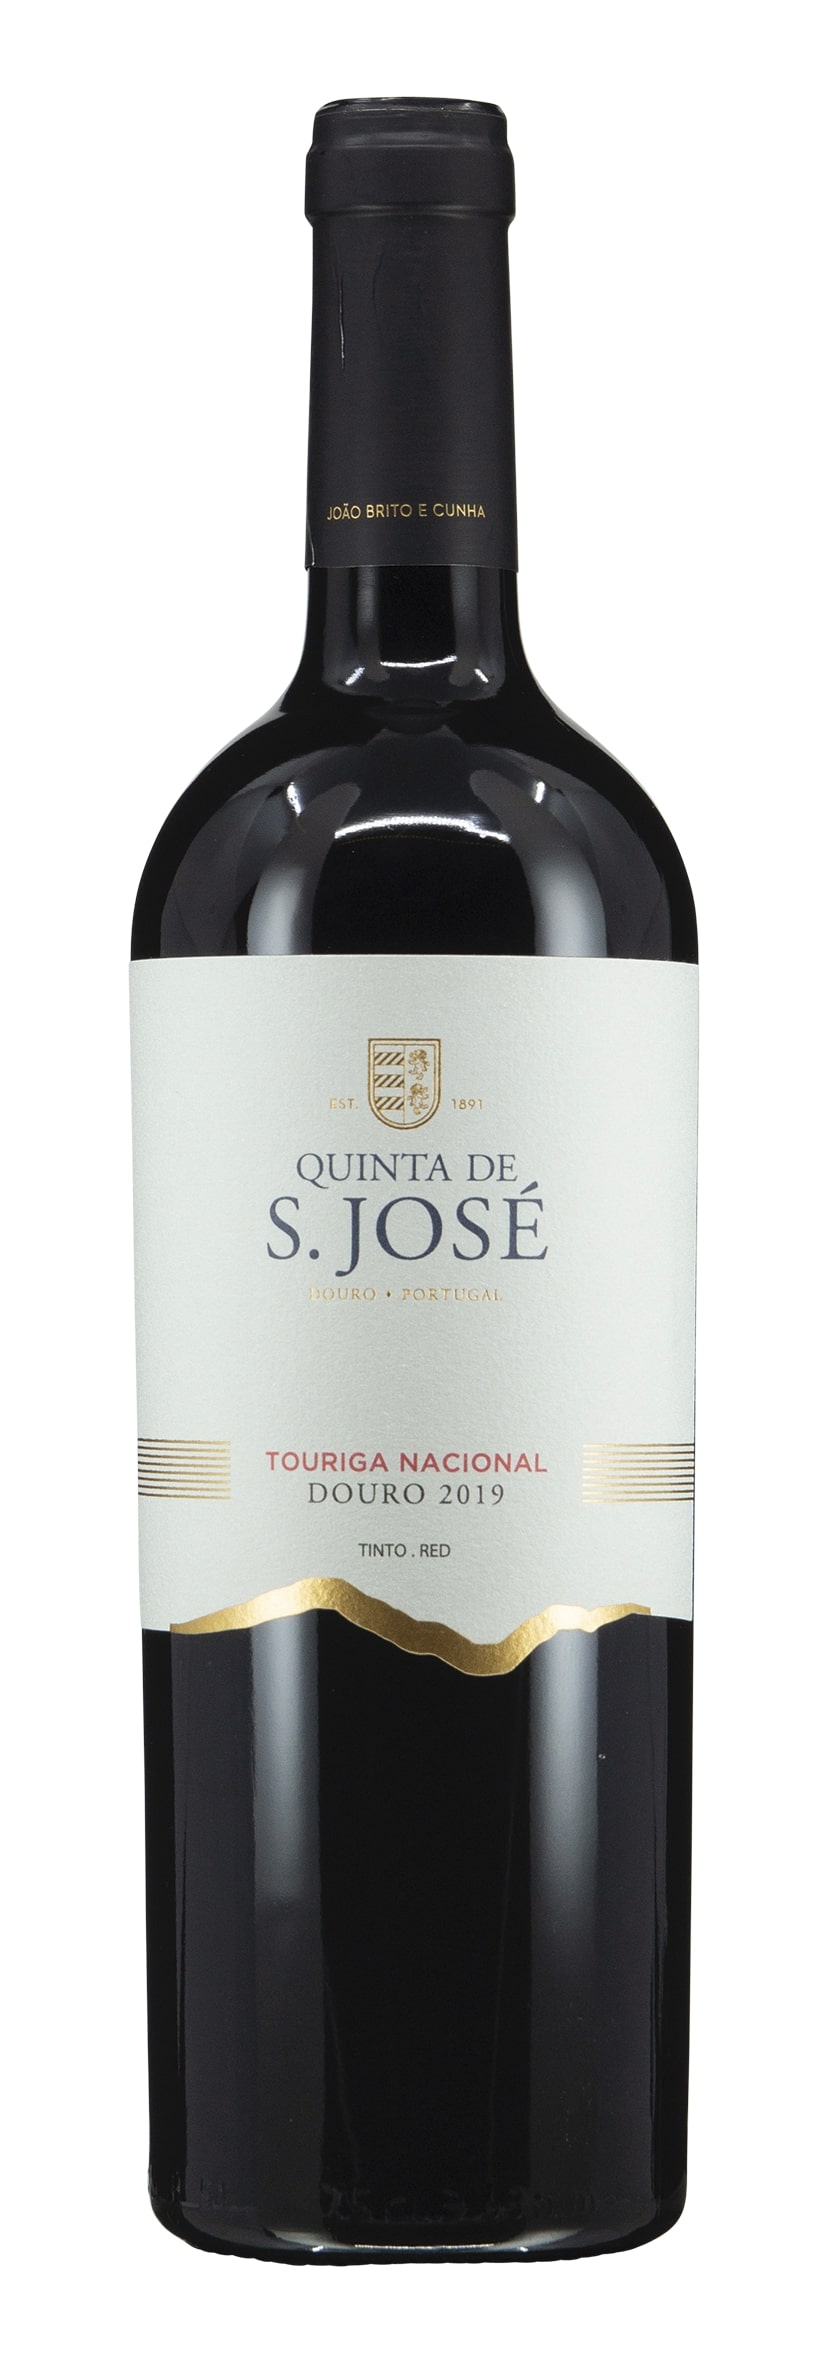 Douro DOC Touriga Nacional Quinta de S. José 2019